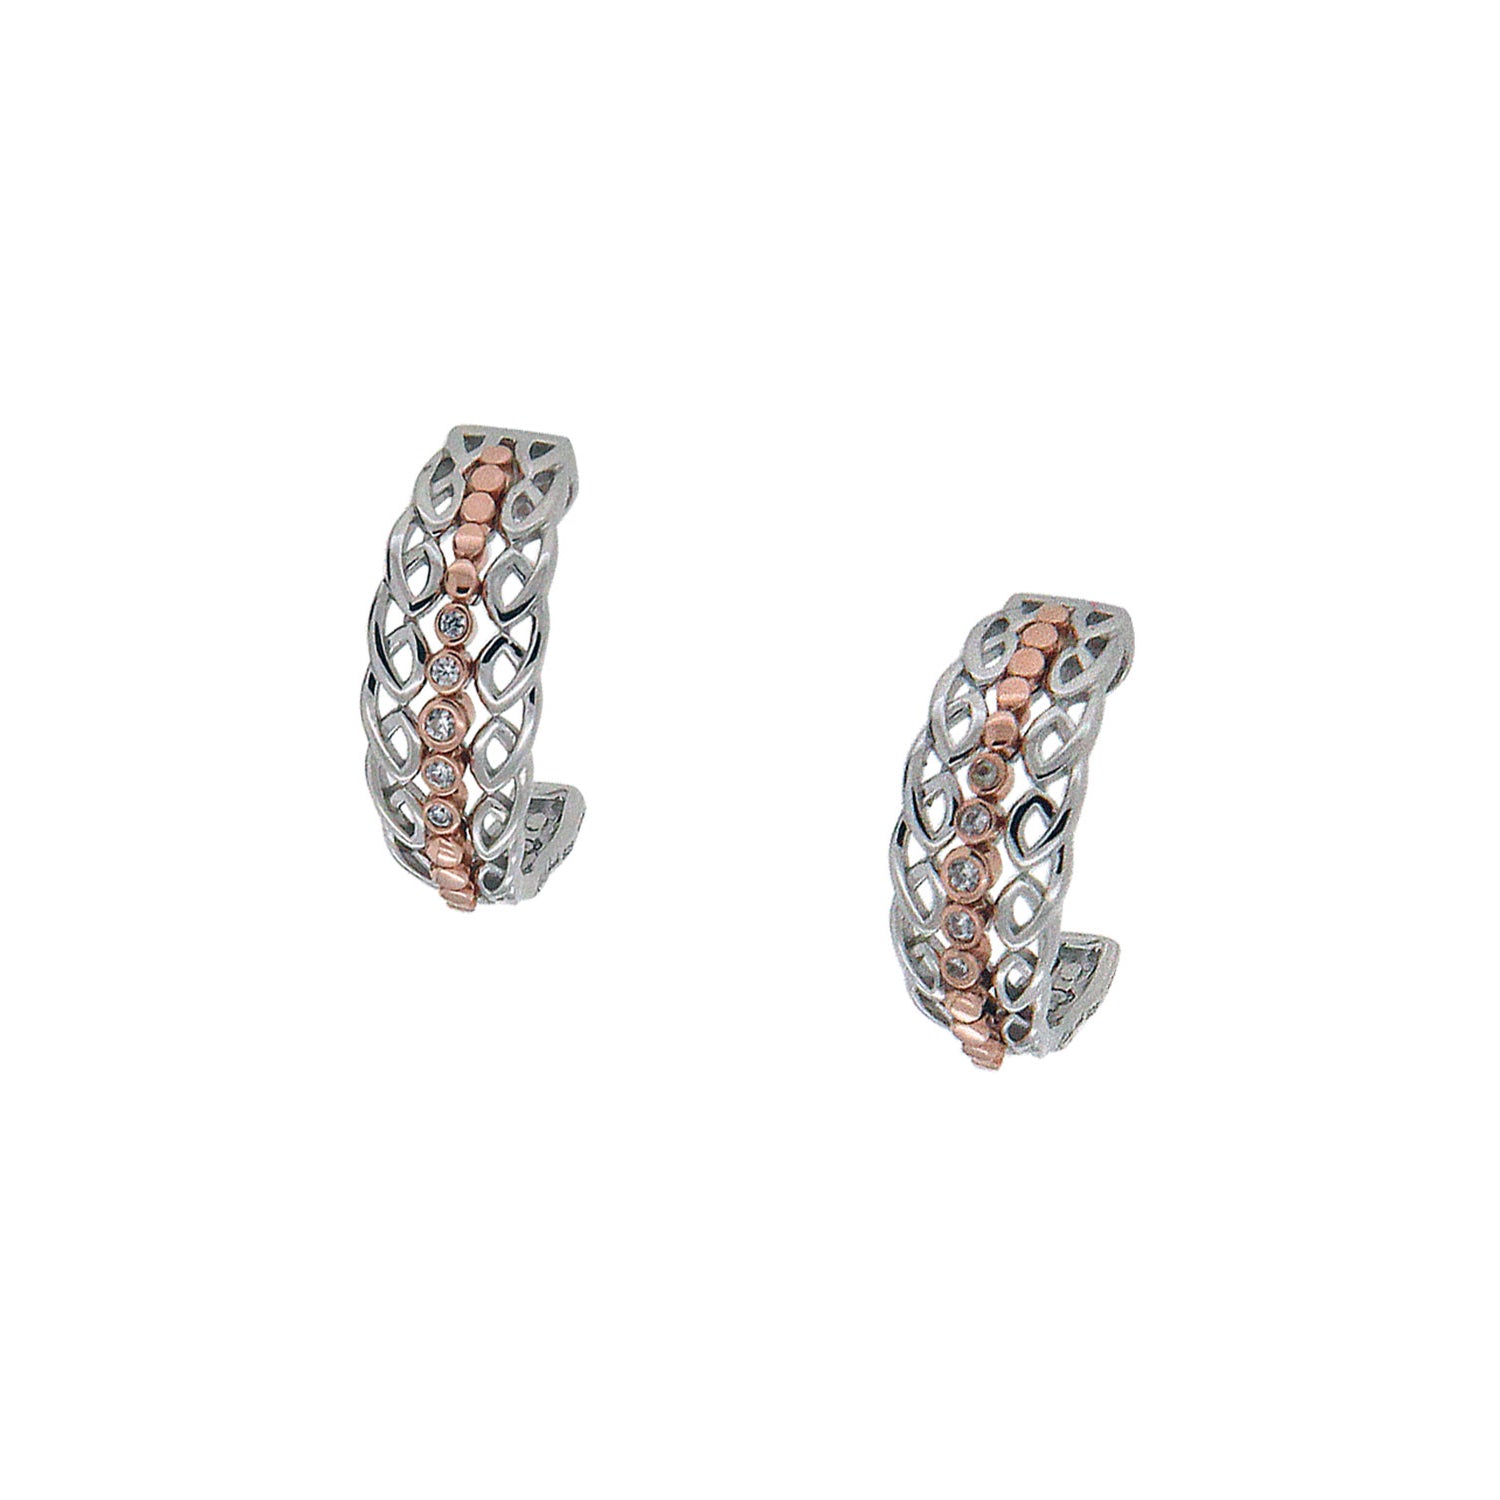 Earrings Rhodium 10k Rose CZ Half Creole Bridge Earrings from welch and company jewelers near syracuse ny 